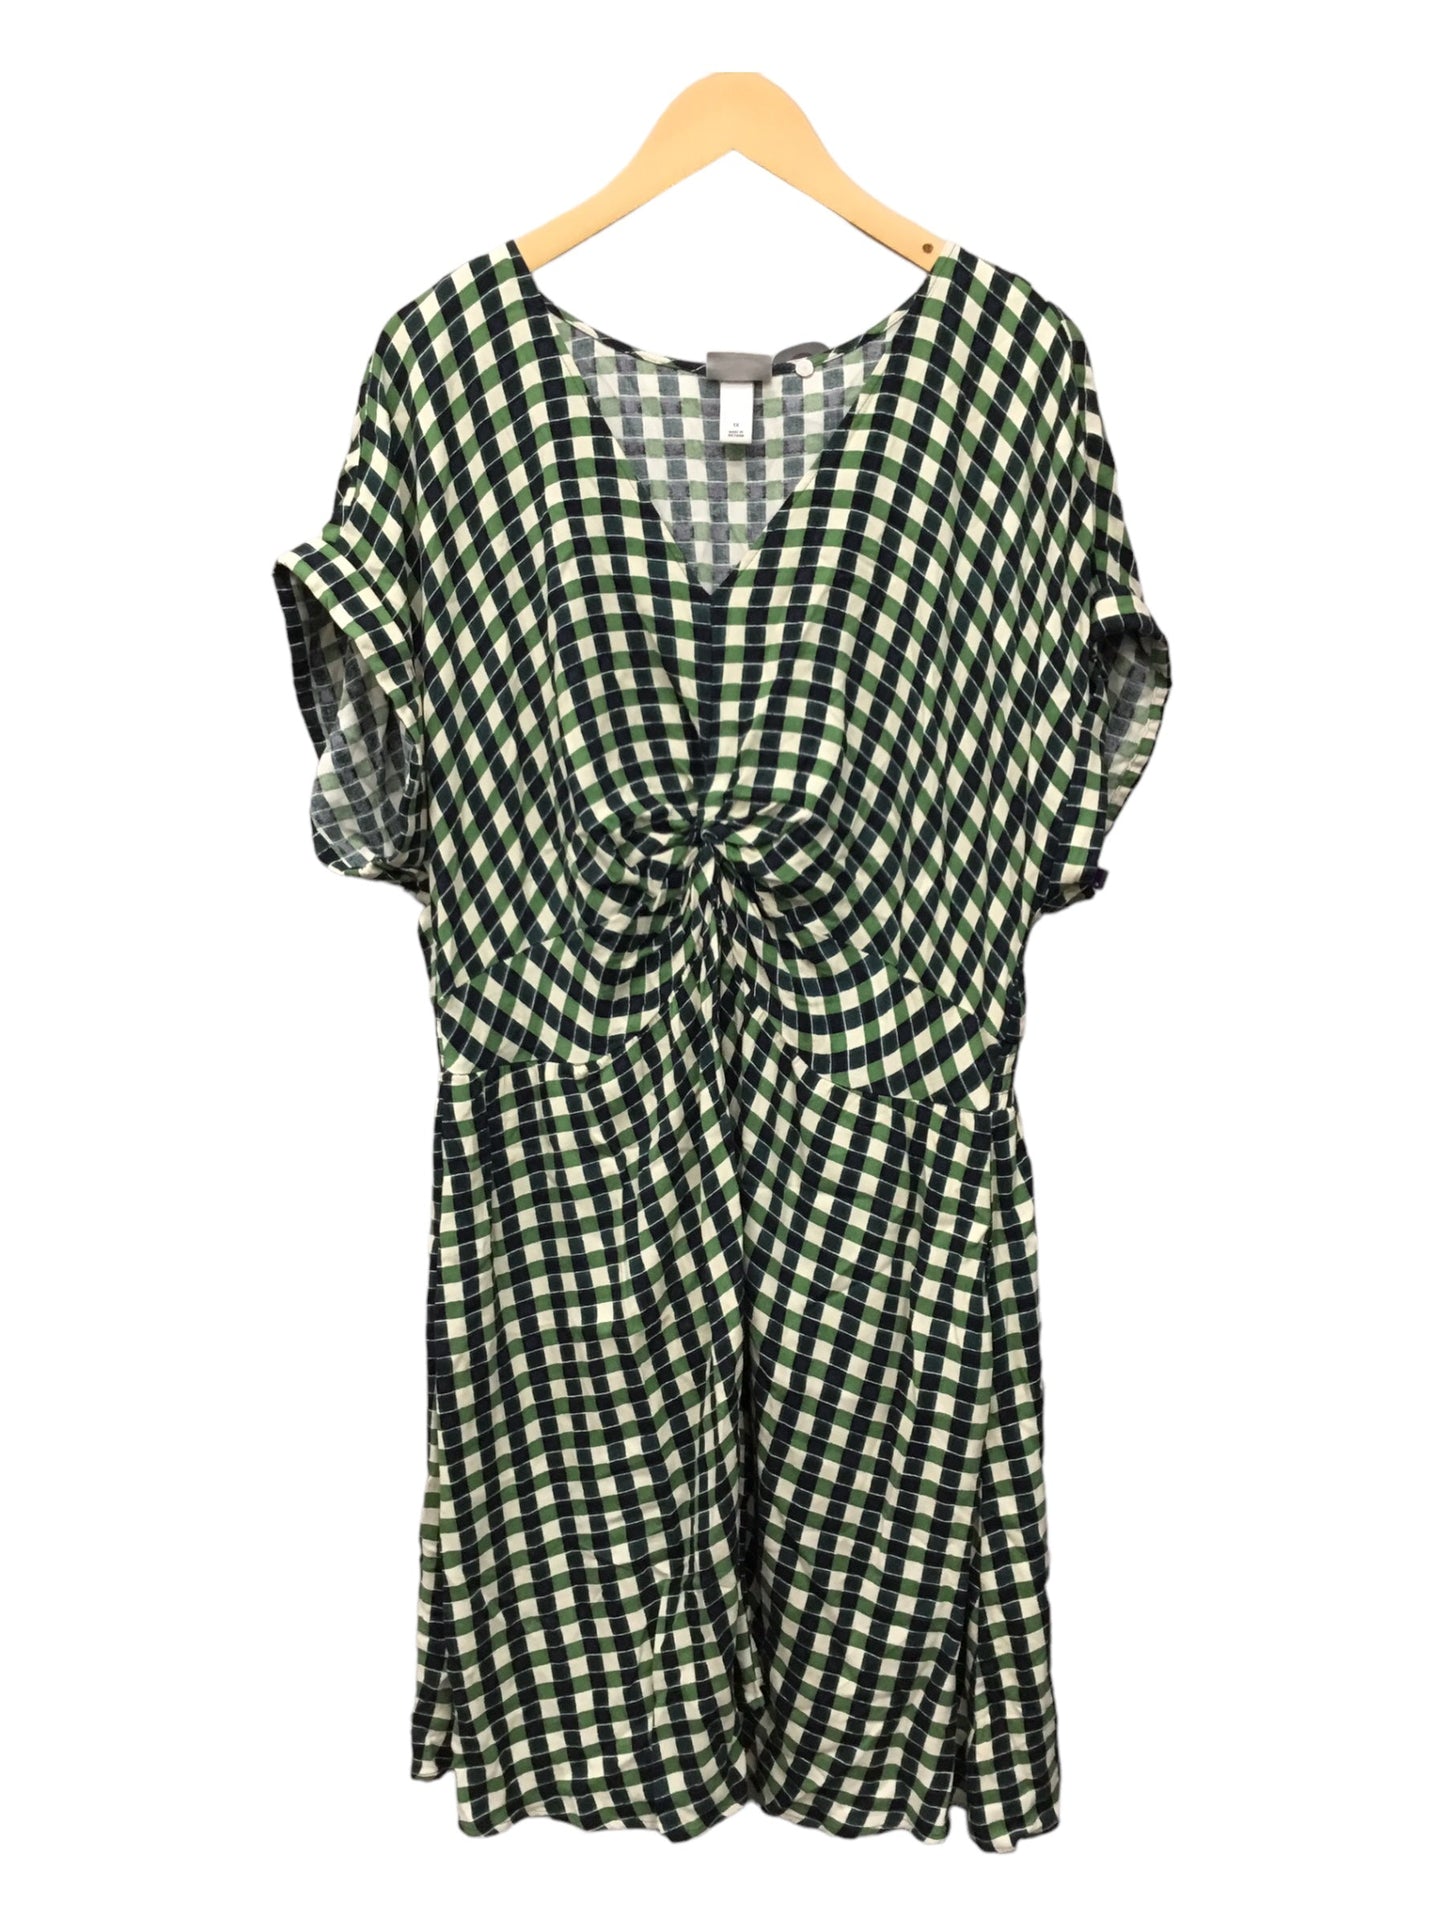 Green Dress Casual Midi Ava & Viv, Size 1x